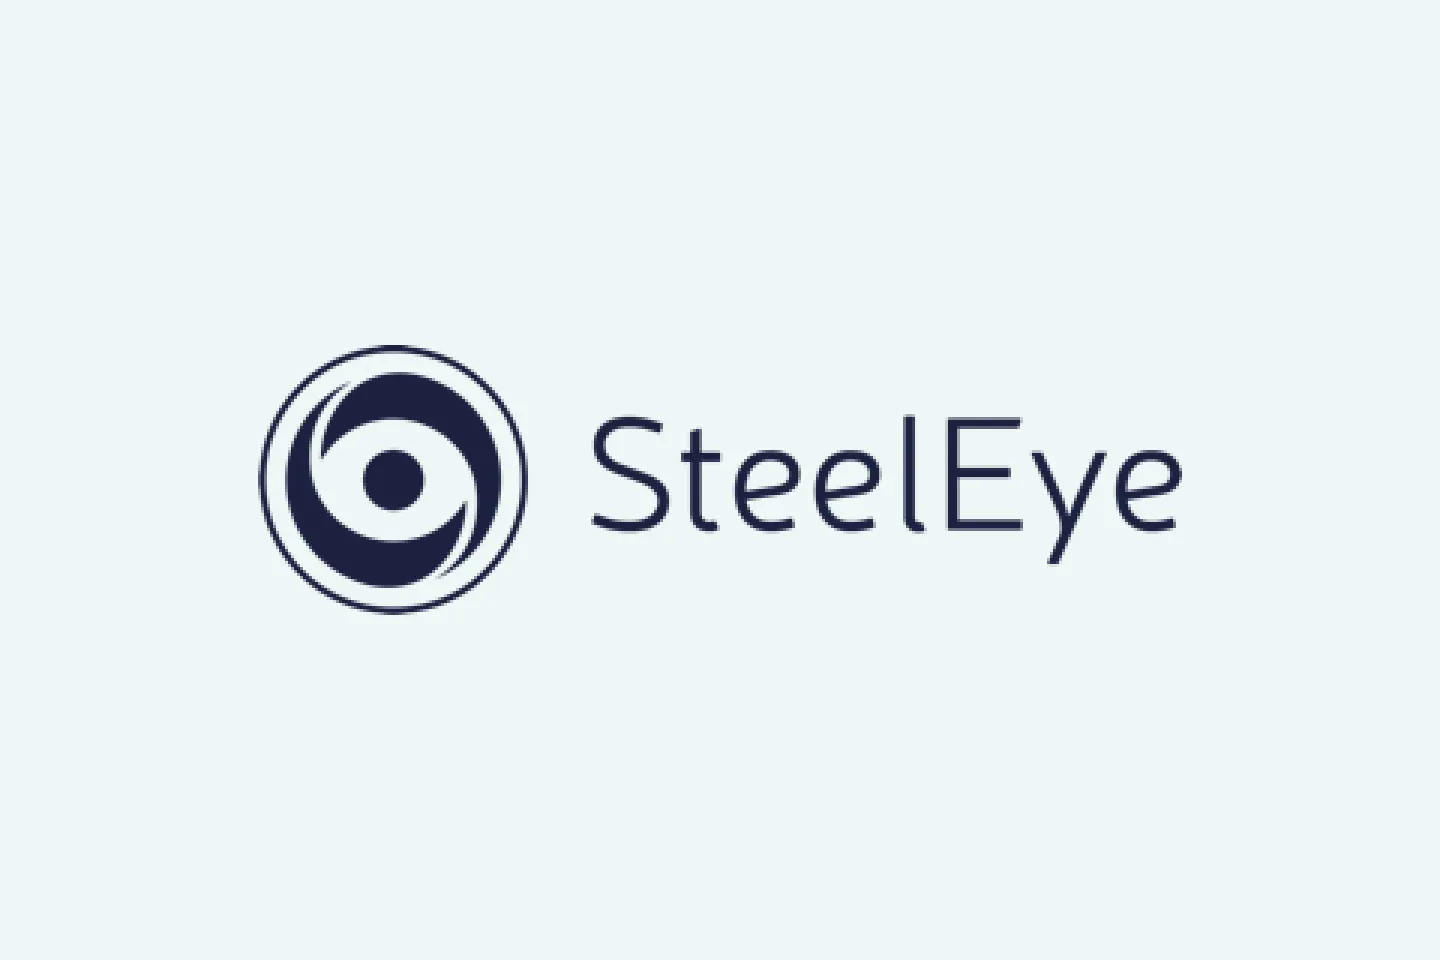 Steeleye logo